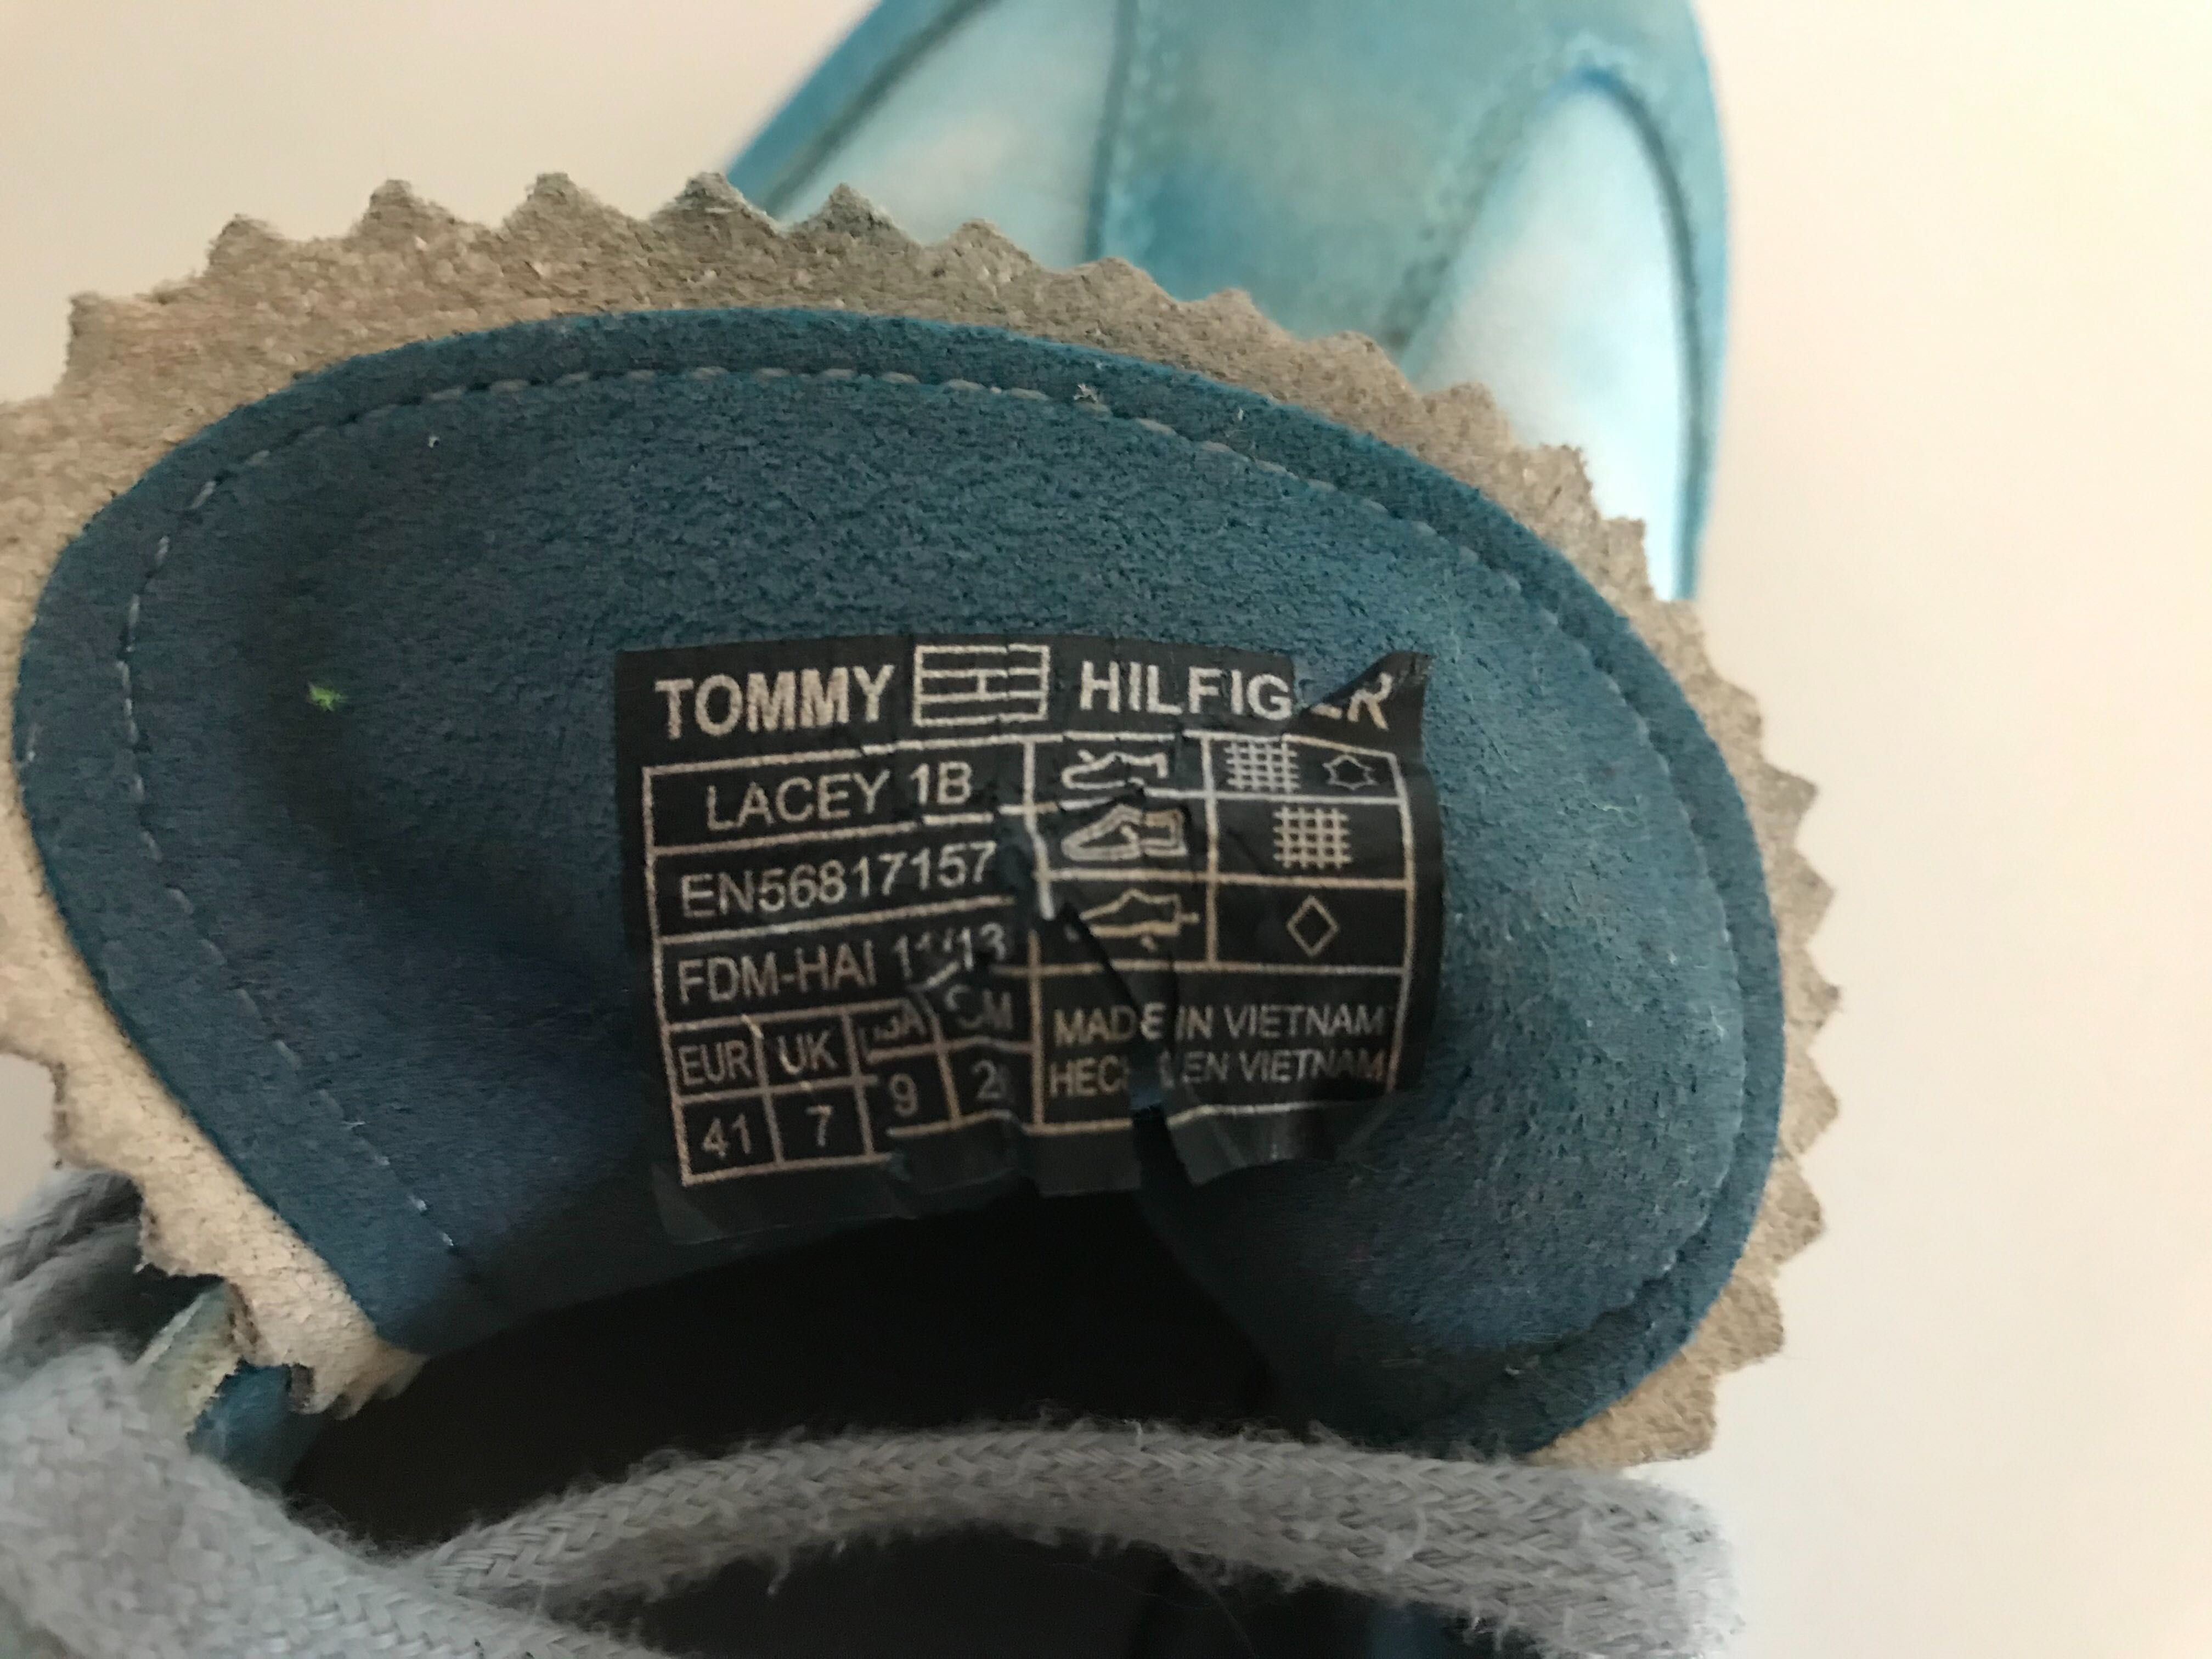 Buty Tommy Hilfiger Denim - sneakersy, adidasy, rozmiar 41